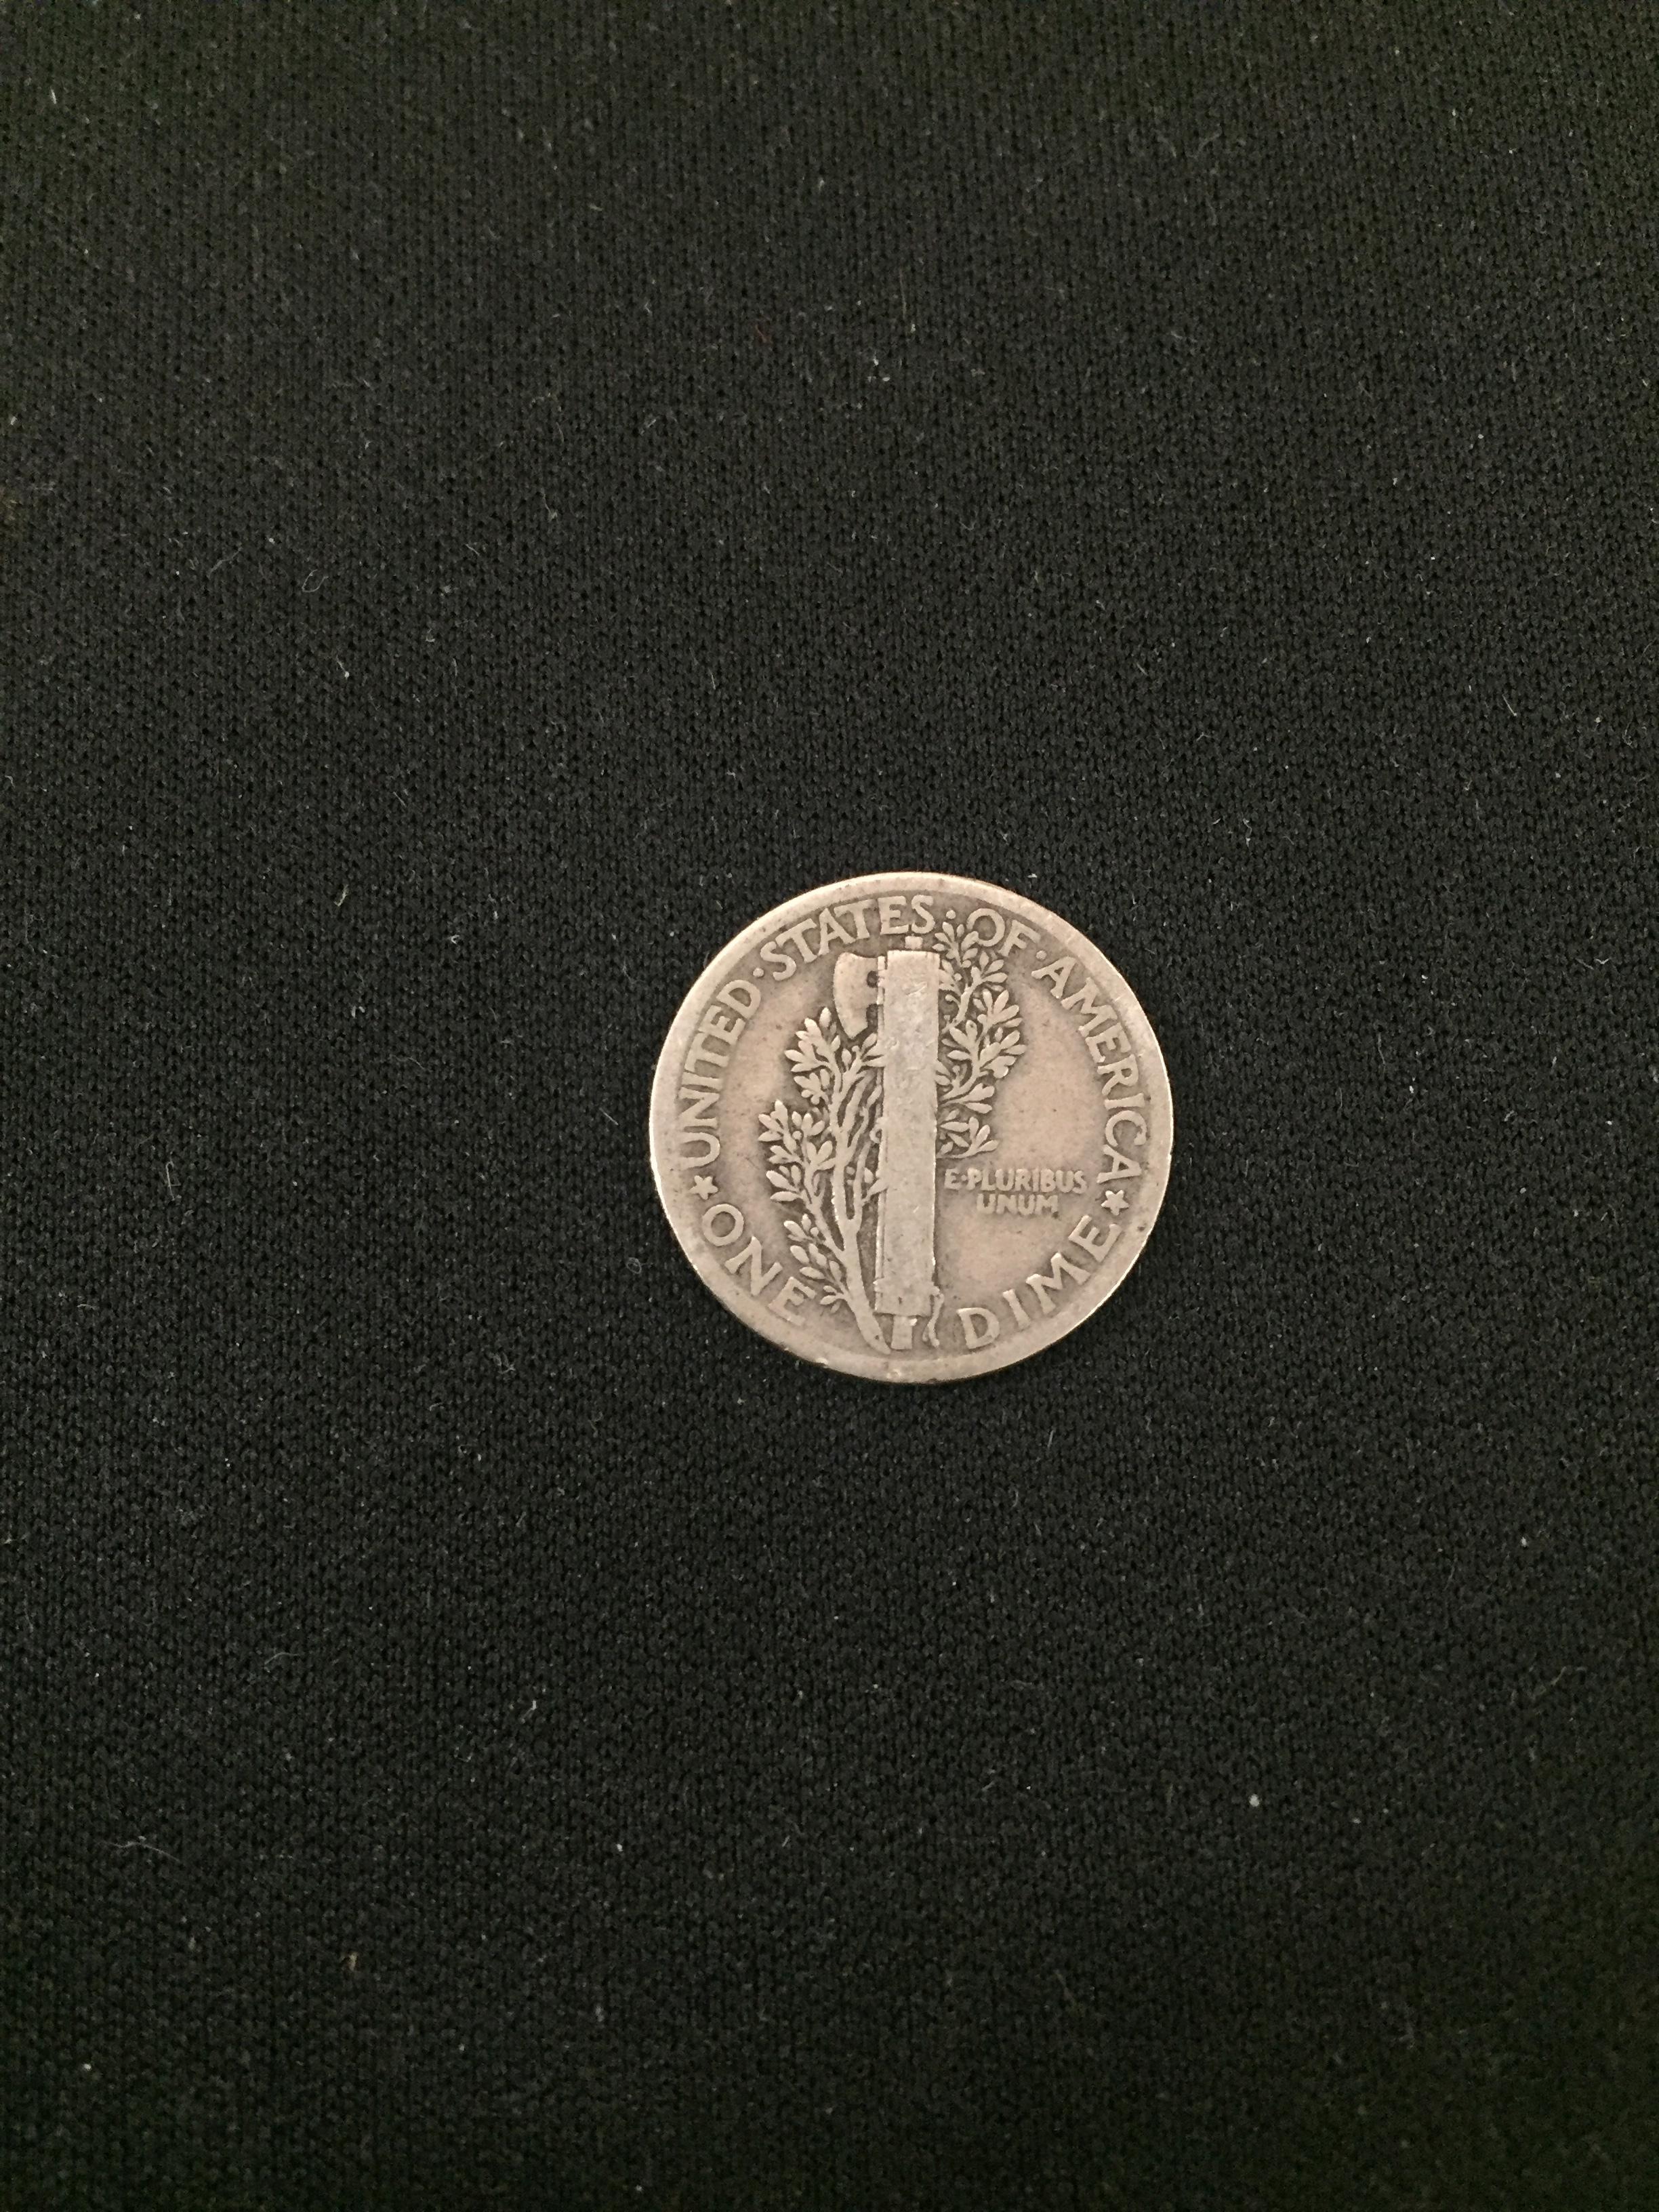 1920-United States Mercury Dime - 90% Silver Coin